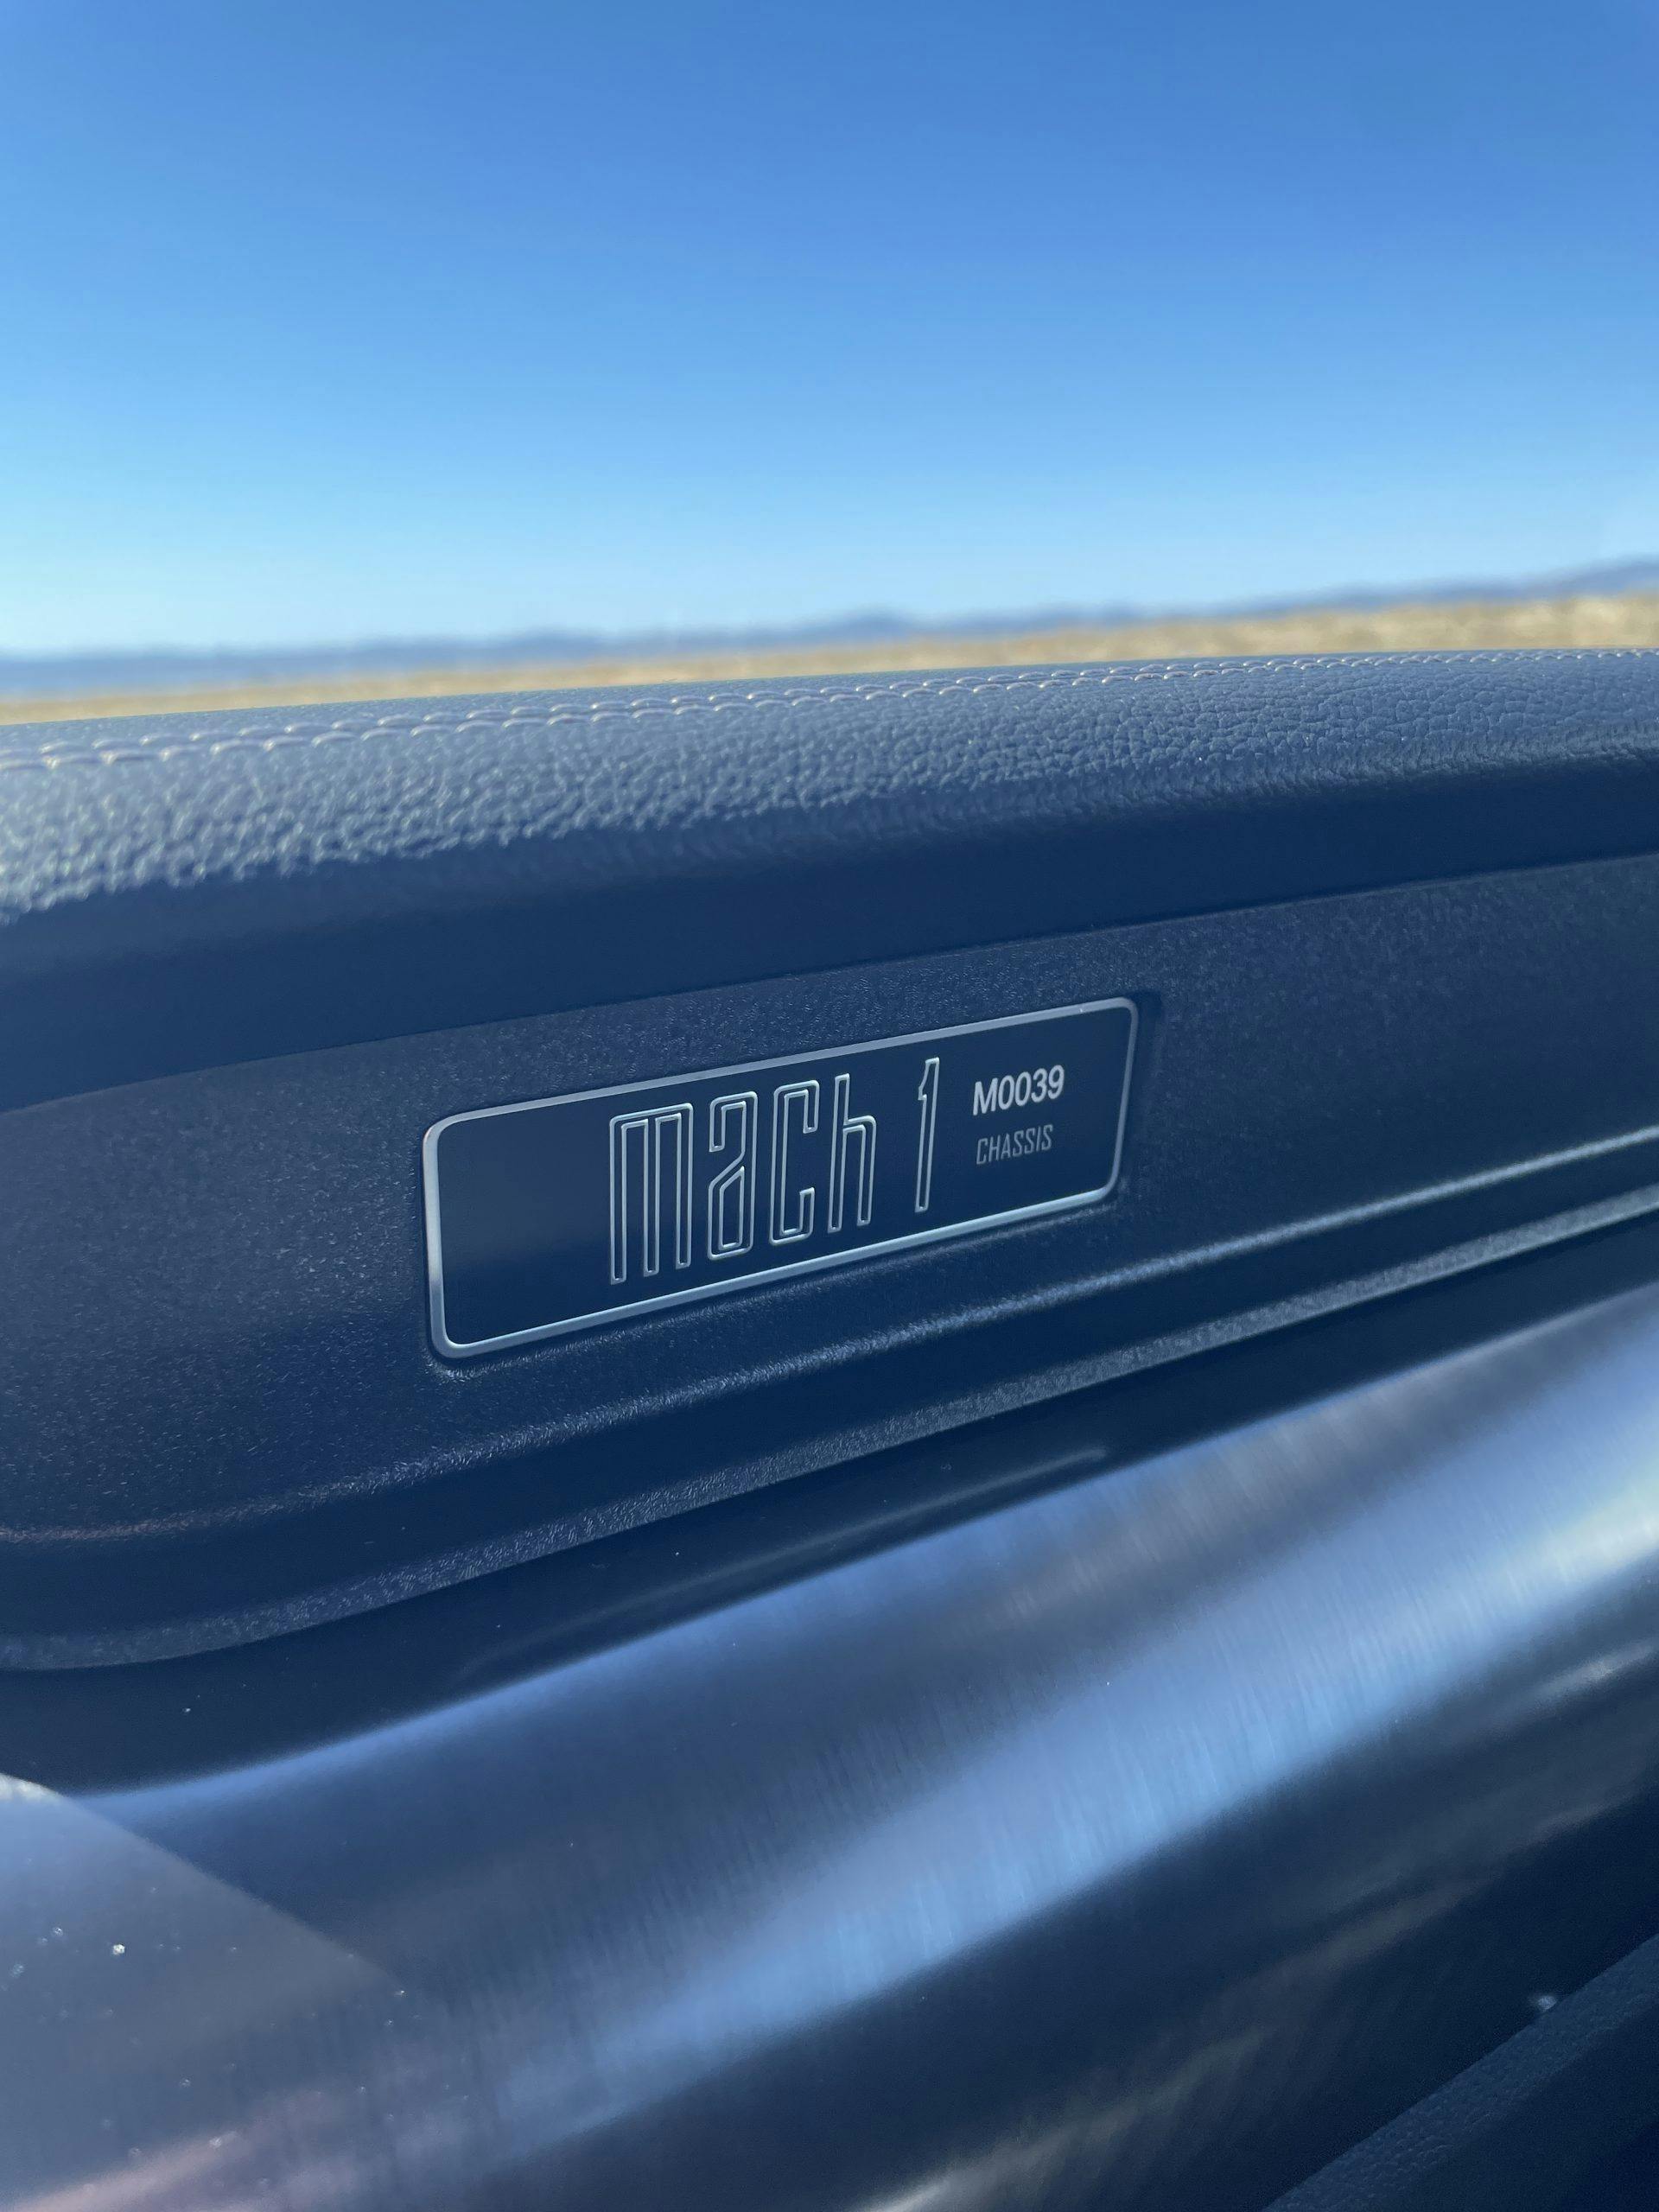 New Mustang Mach 1 interior emblem